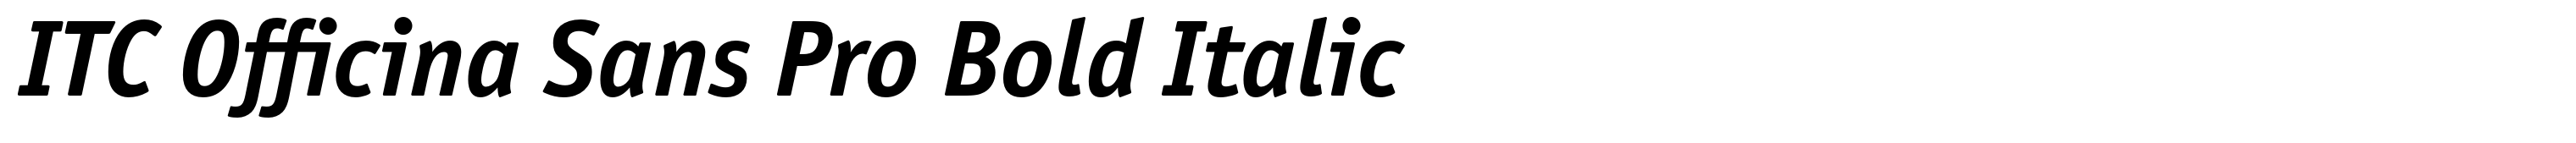 ITC Officina Sans Pro Bold Italic